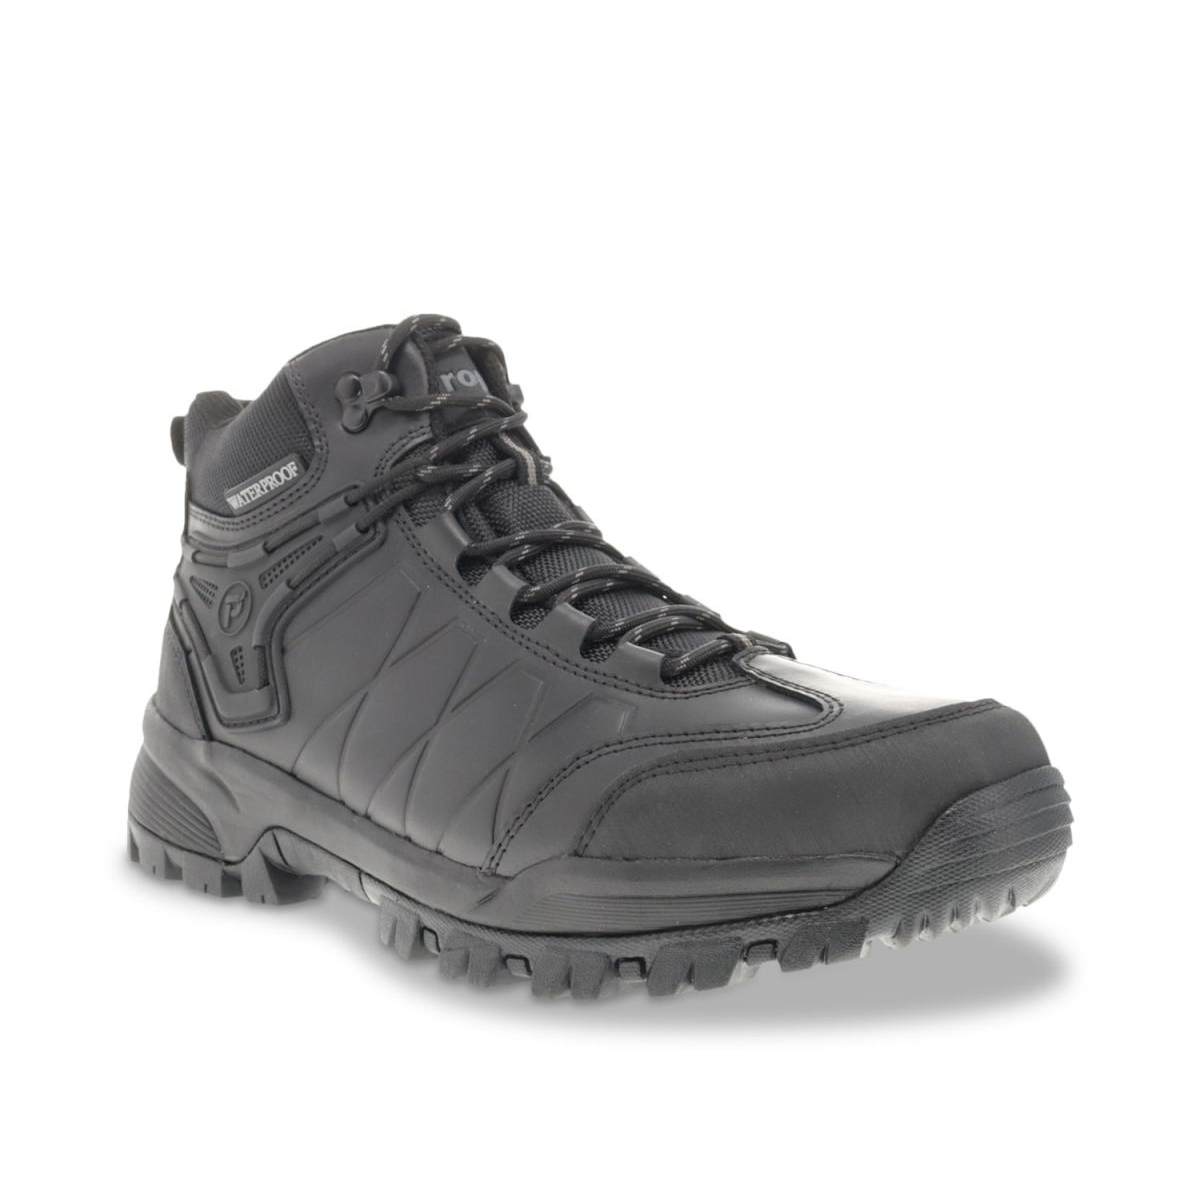 Propet Men's Ridge Walker Force Hiking Boots Black - MBA052LBLK BLACK - BLACK, 11.5 XX-Wide